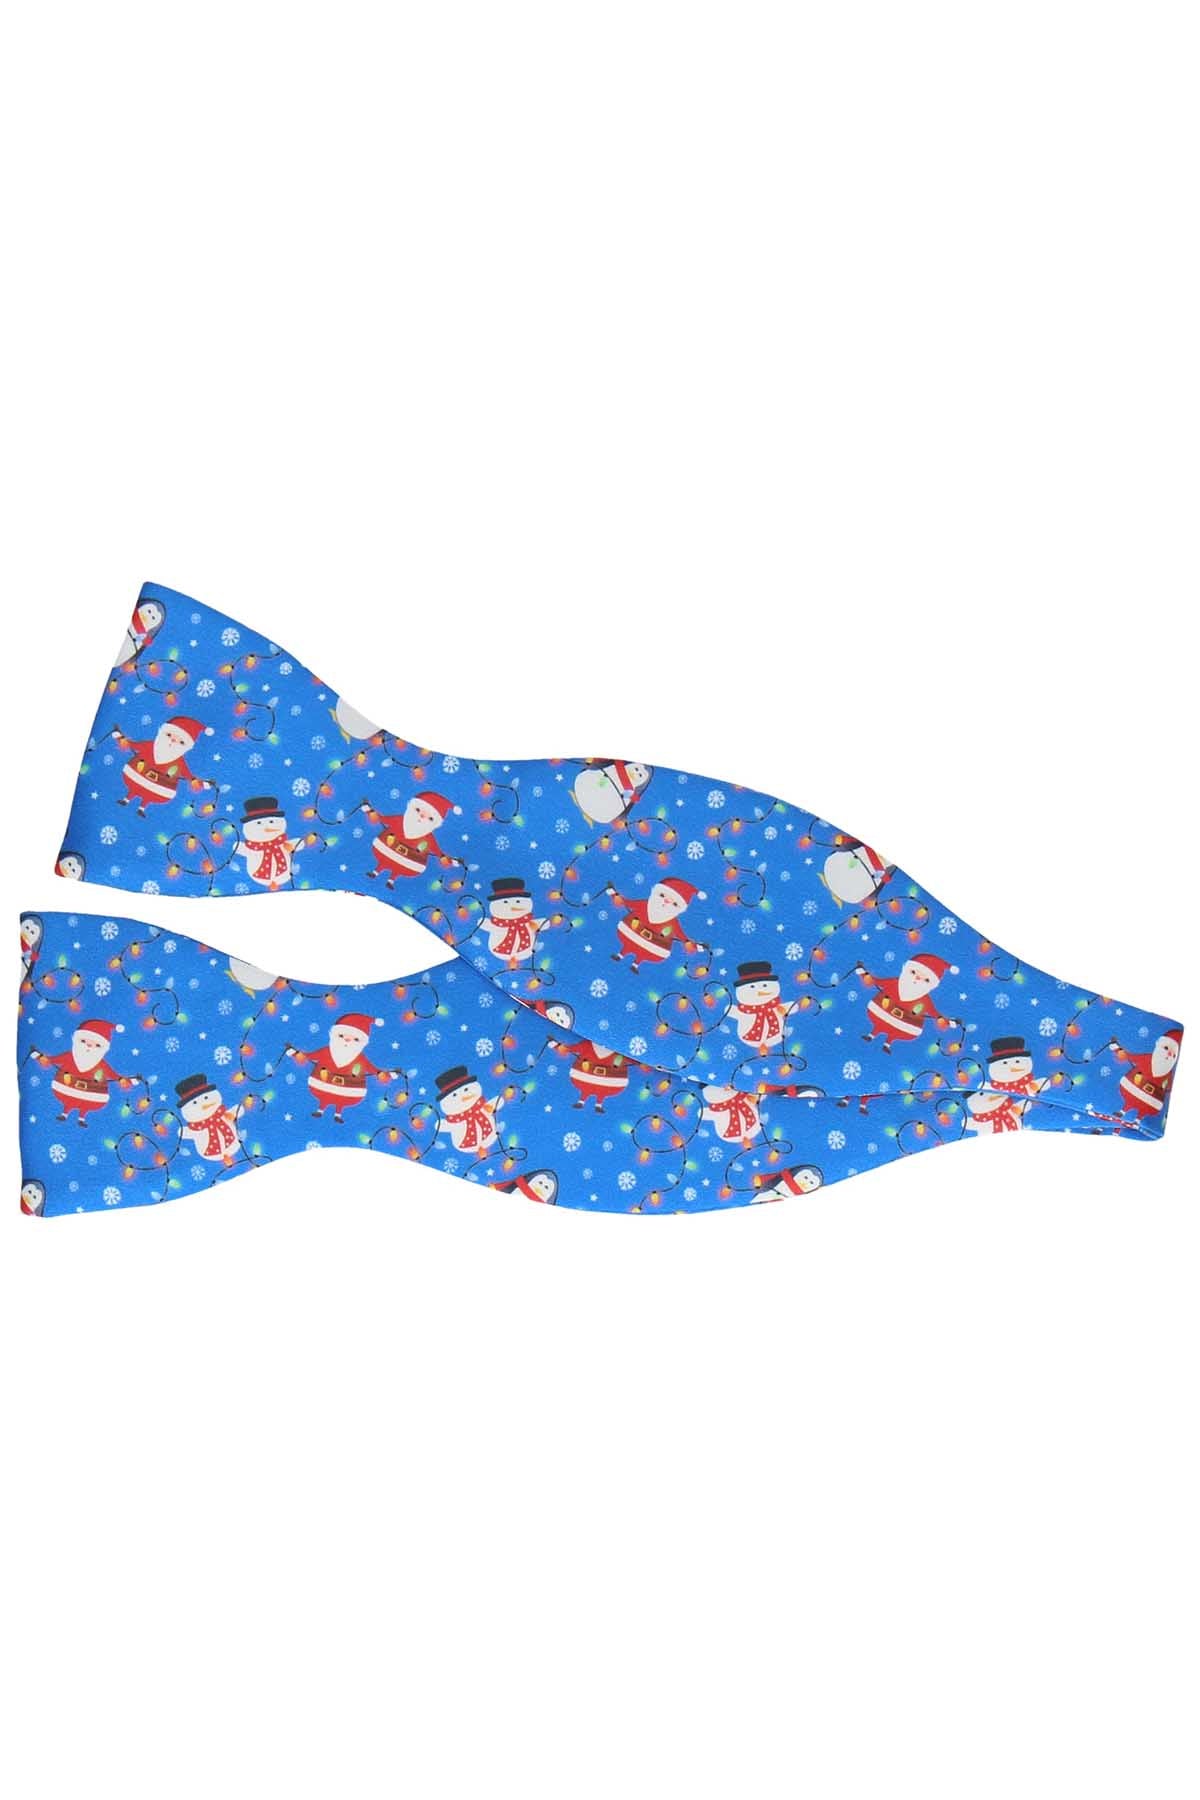 Mrs. Bow Tie Blue Christmas Self-Tie Bow Tie